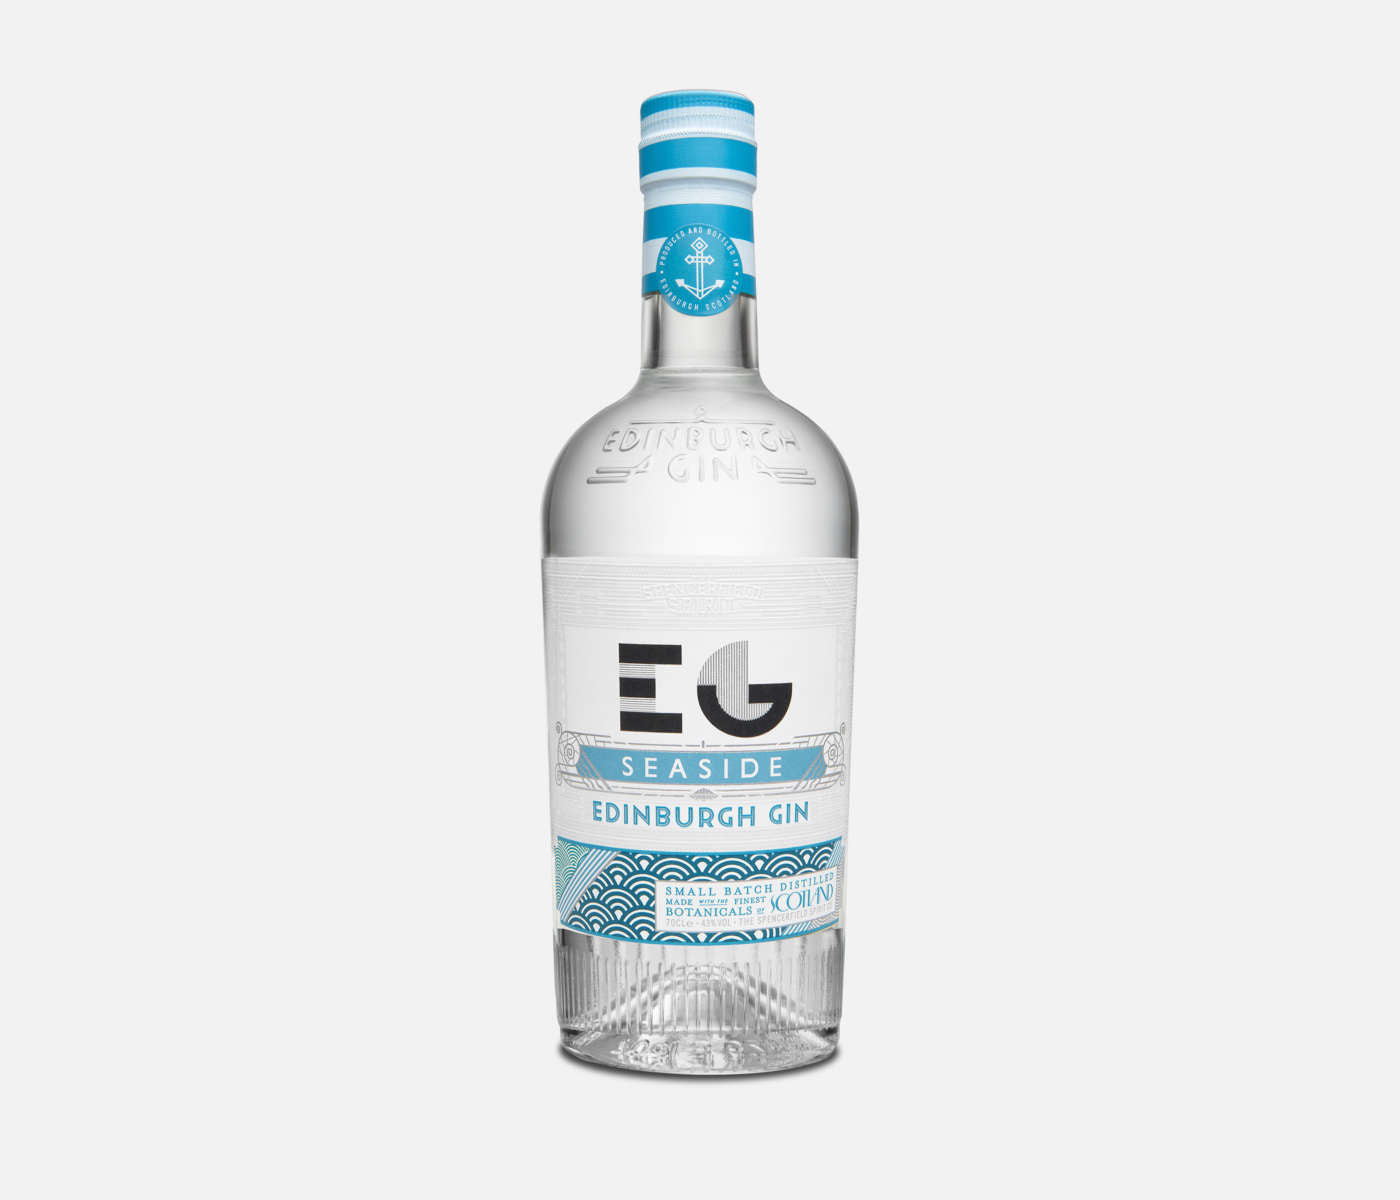 edinburgh gin (70cl, 40%)- all variants edinburgh gin seaside gin